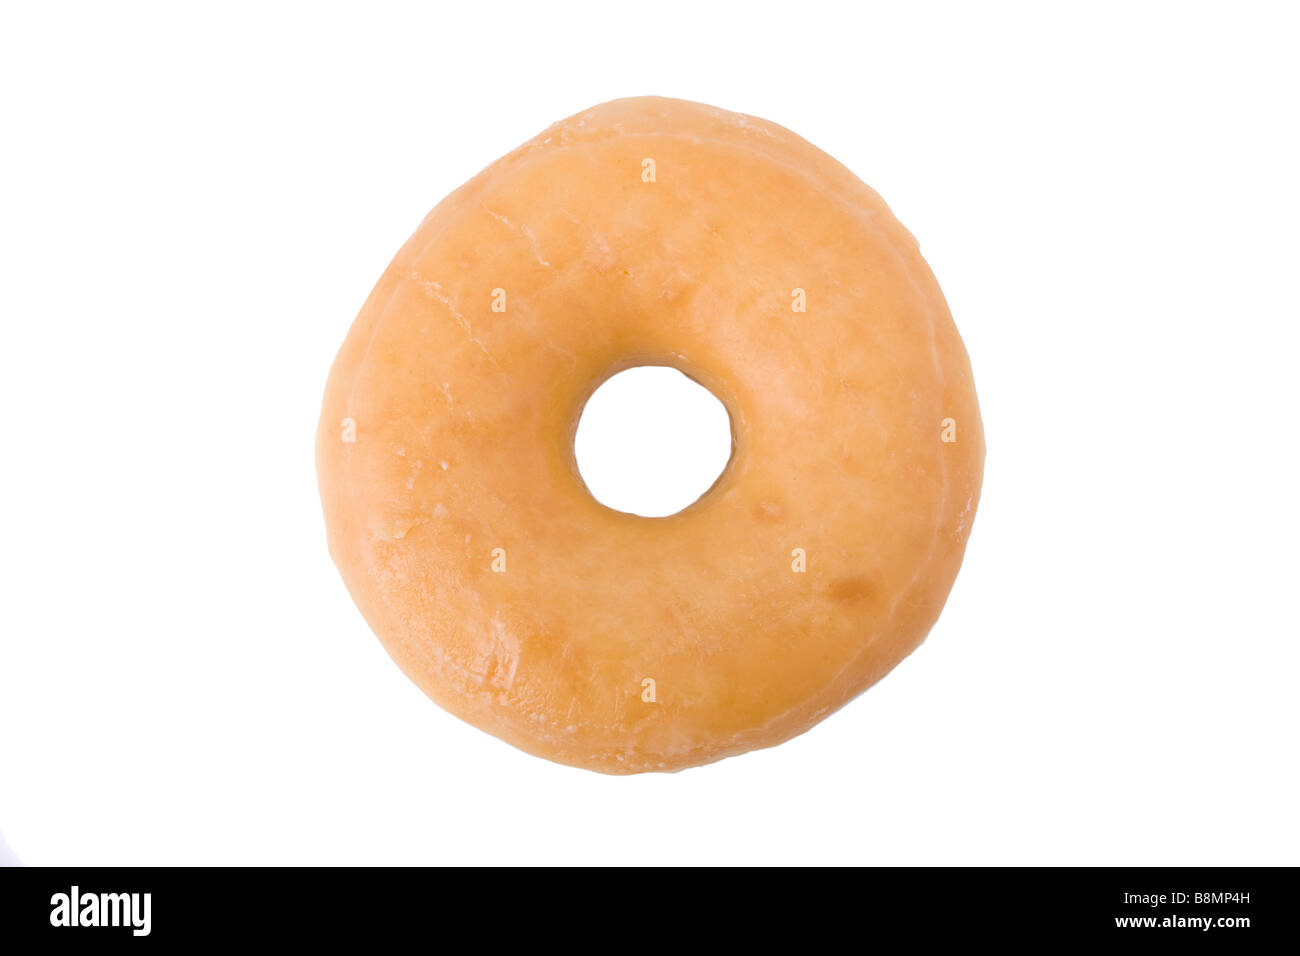 Doughnut or donut isolated on white Stock Photo